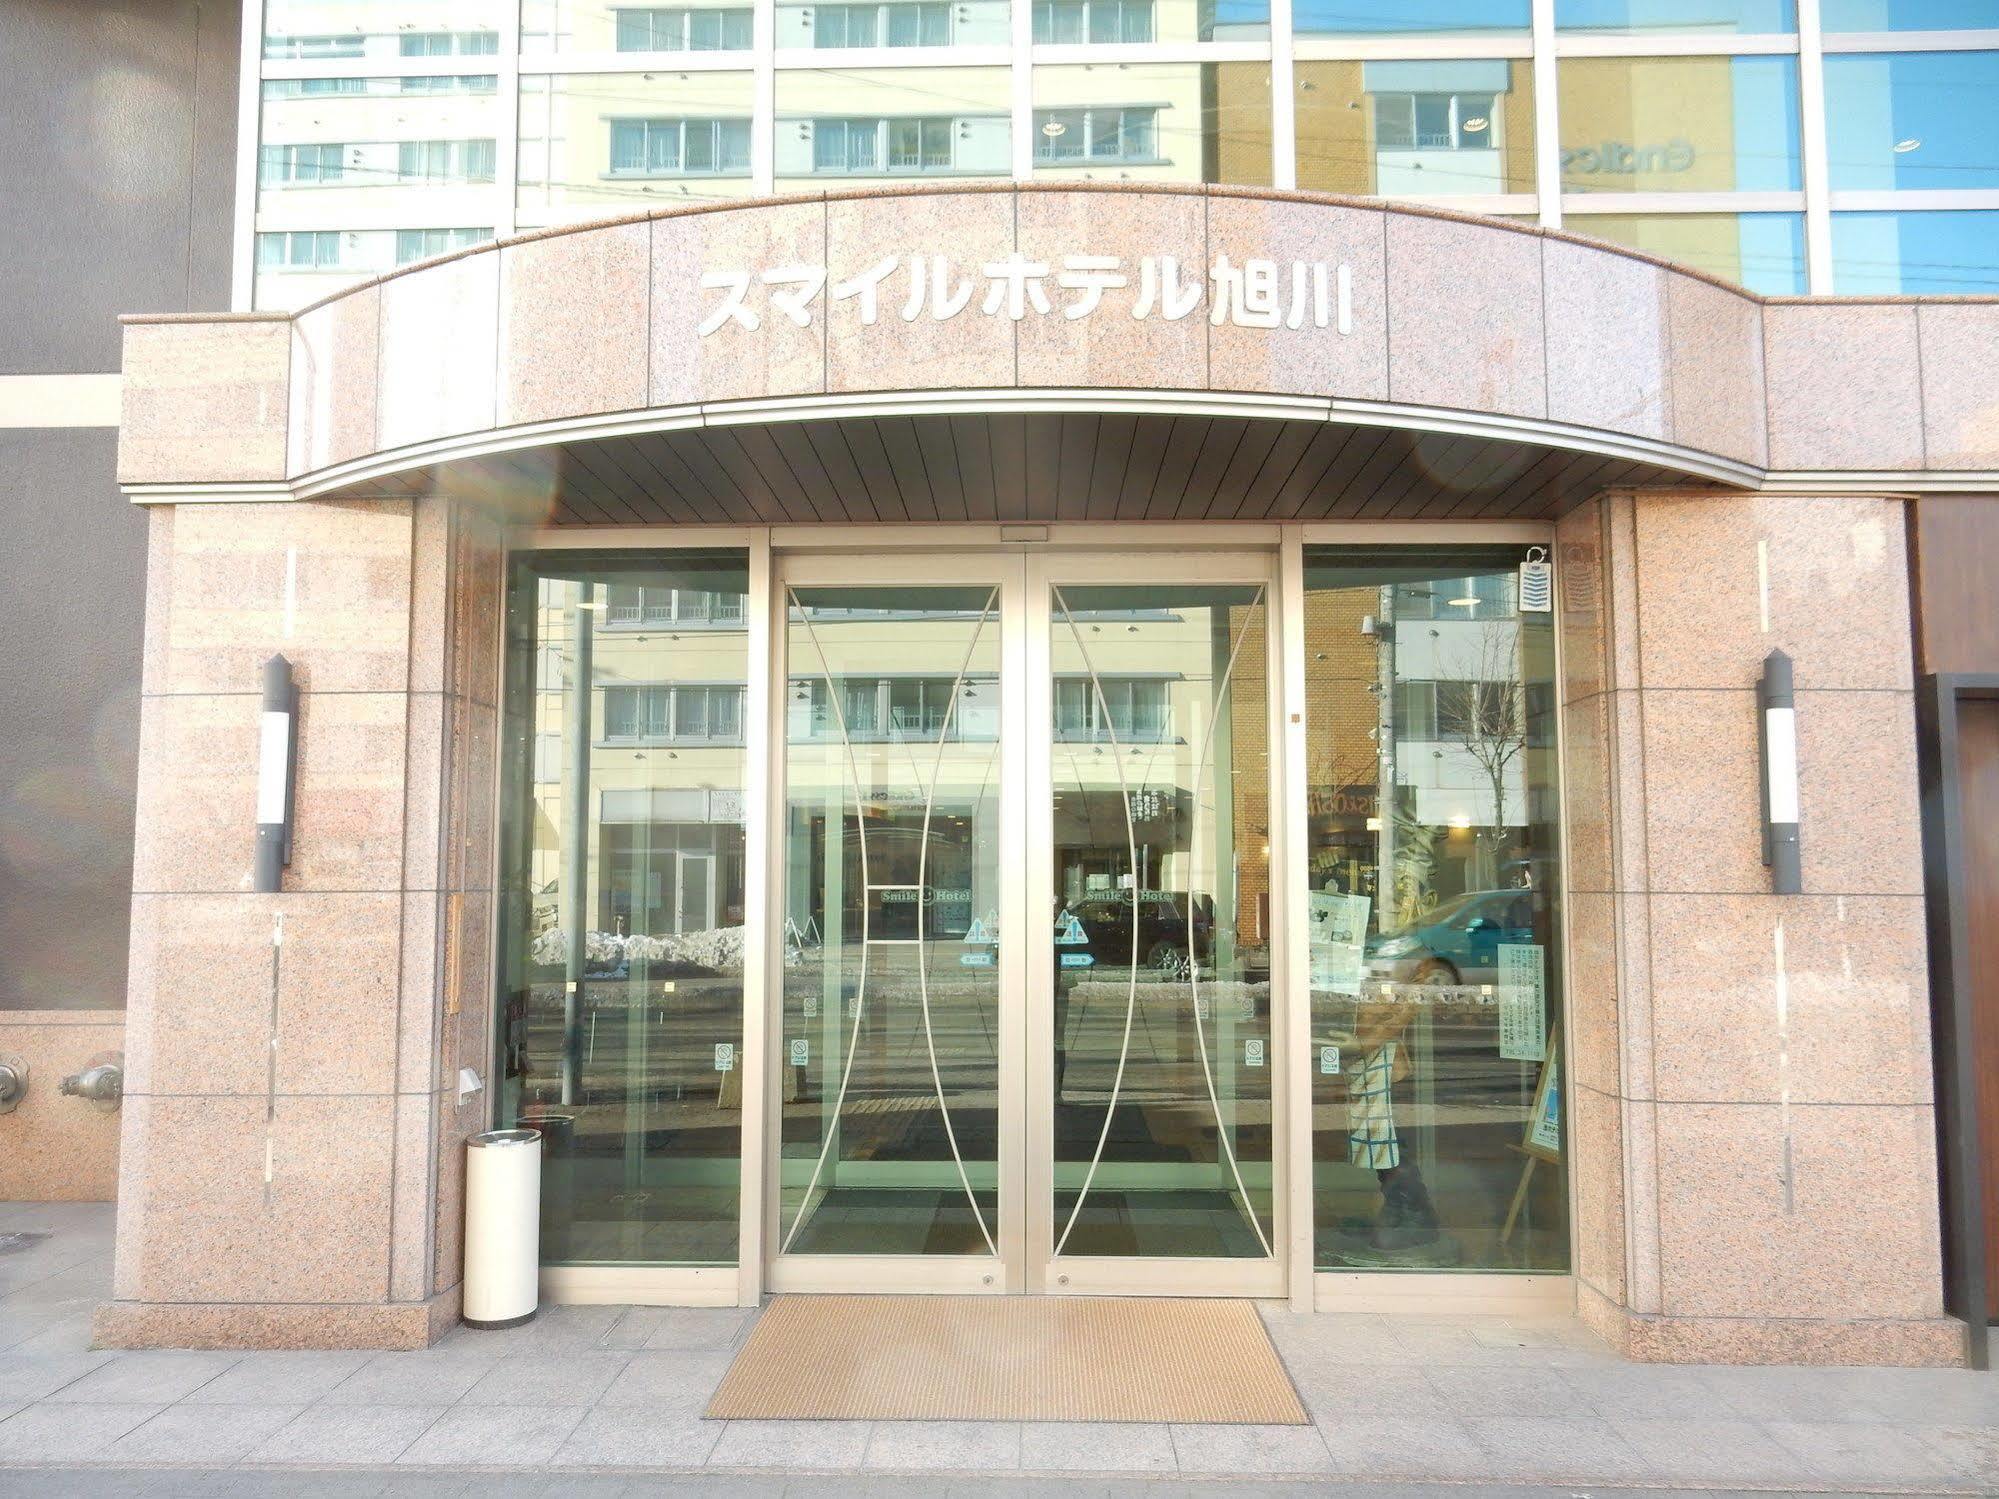 Smile Hotel Asahikawa Exterior photo